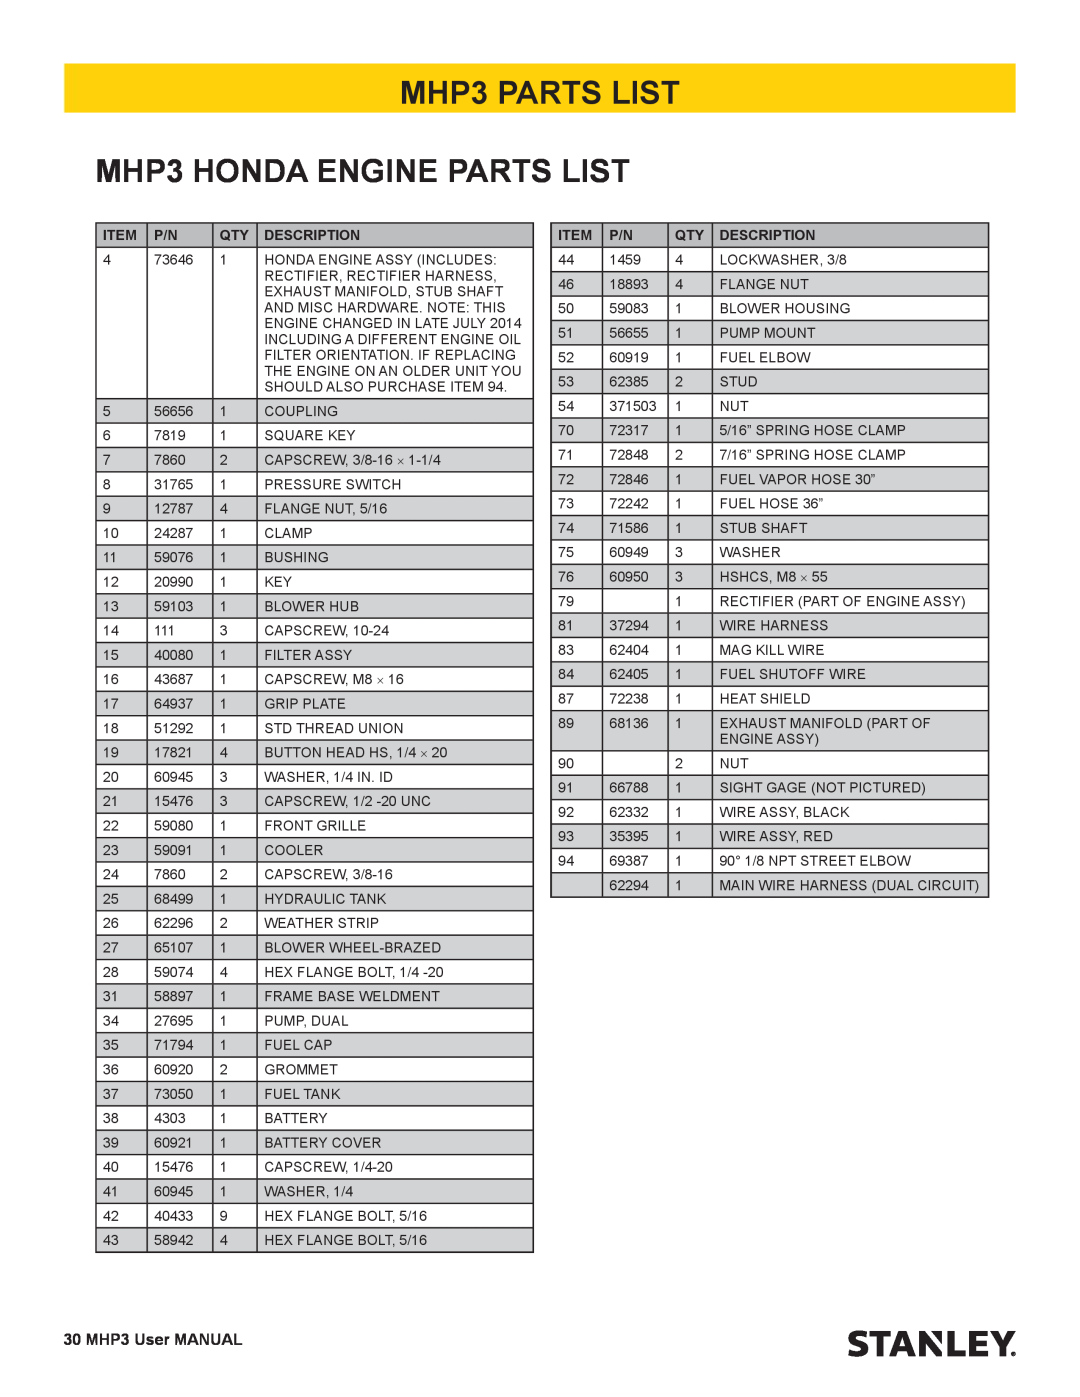 Stanley Black & Decker user manual MHP3 PARTS LIST MHP3 HONDA ENGINE PARTS LIST, 30 MHP3 User MANUAL 